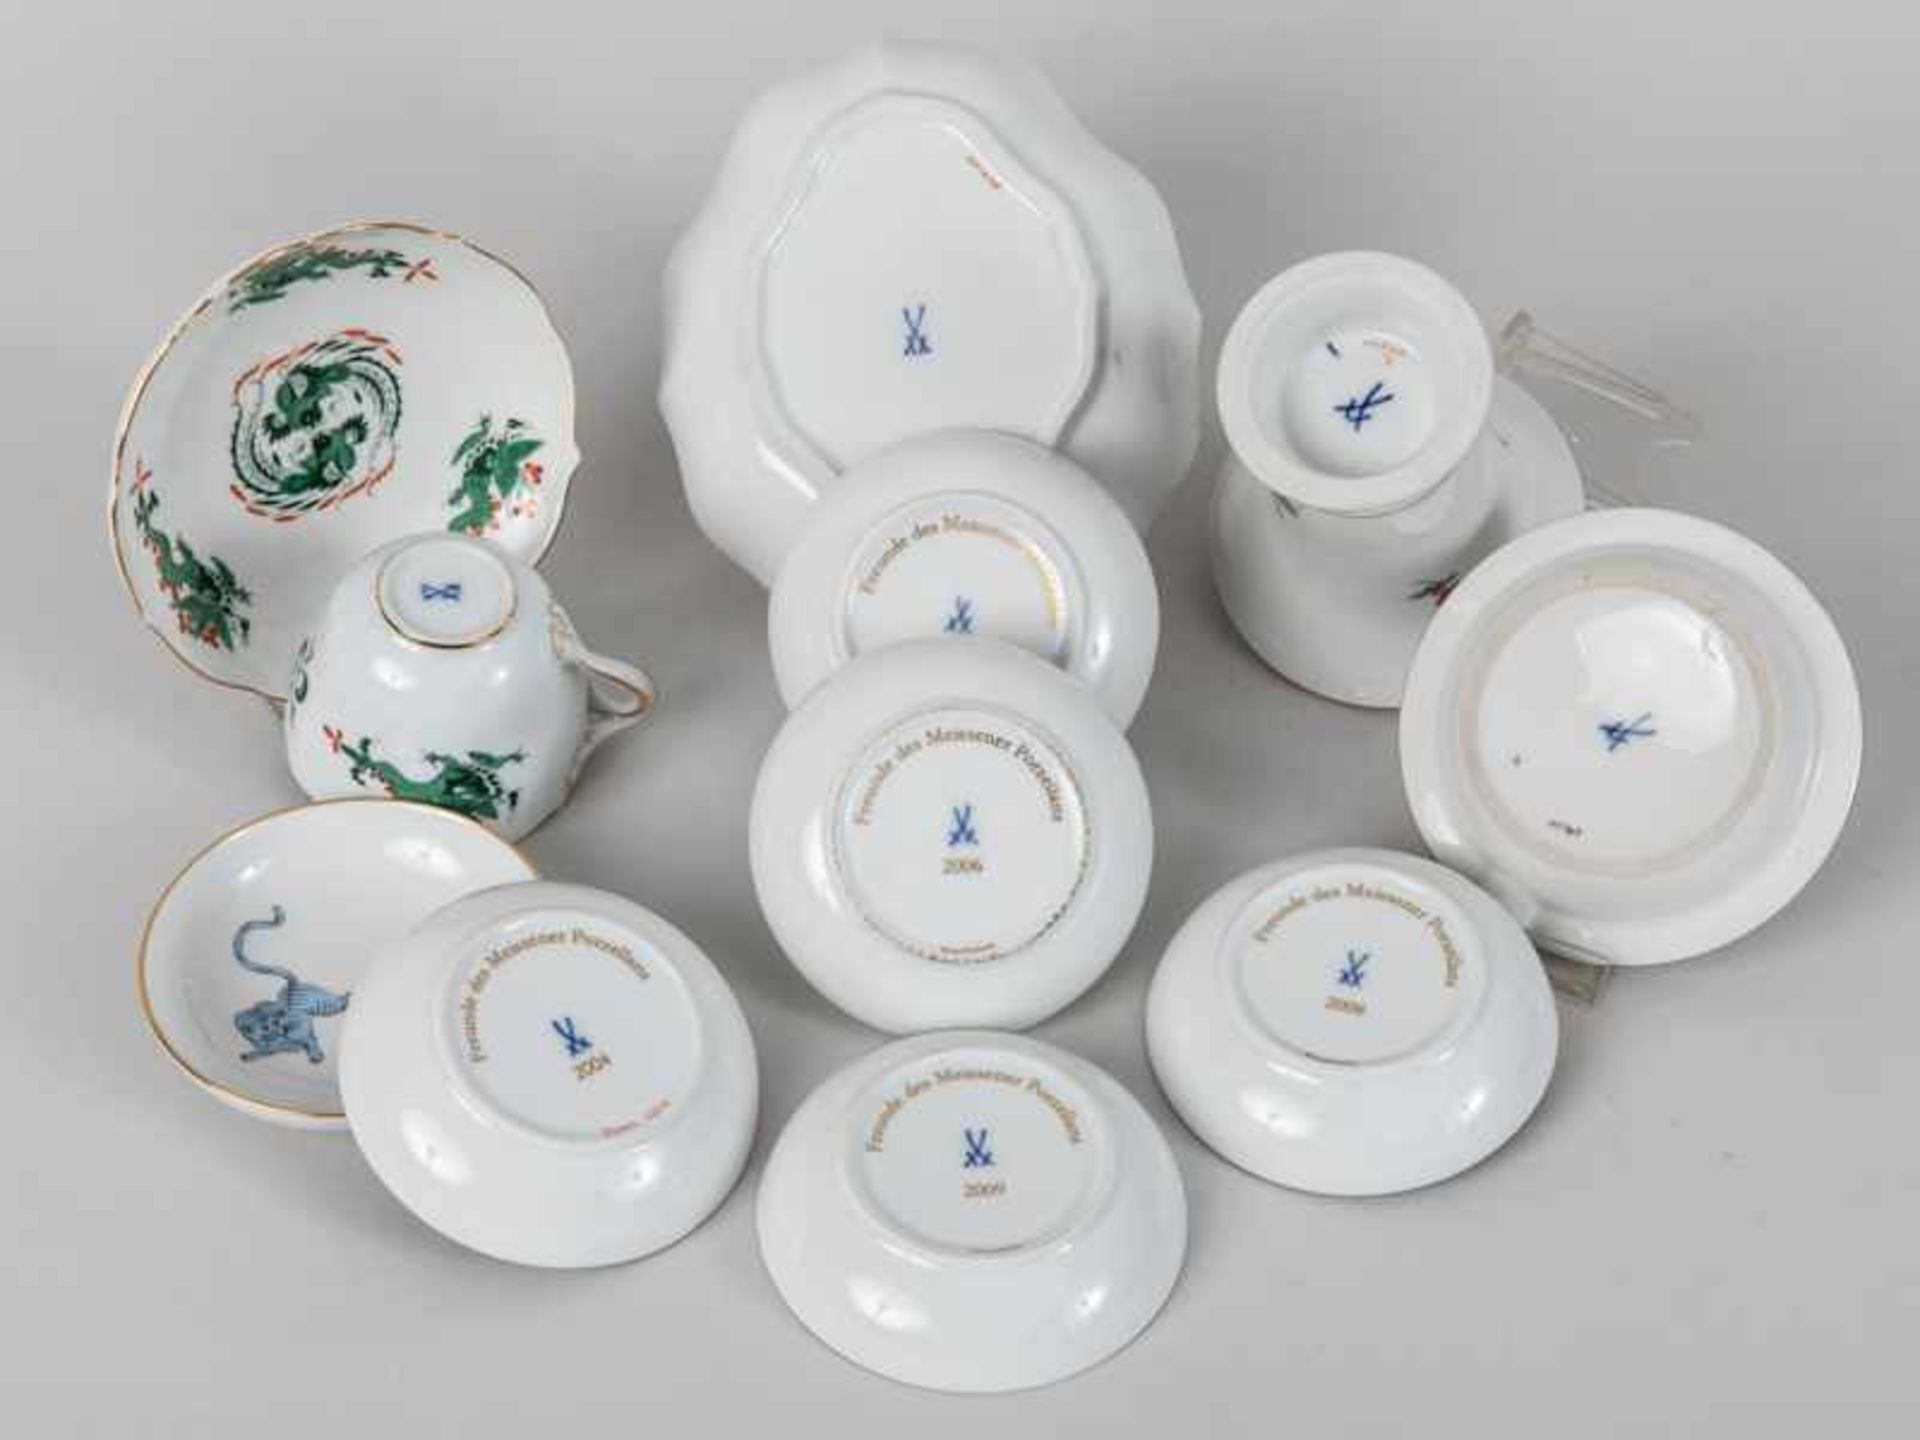 11teiliges Porzellan-Konvolut mit verschiedenen Dekoren, Meissen, 20. Jh. - Image 2 of 4